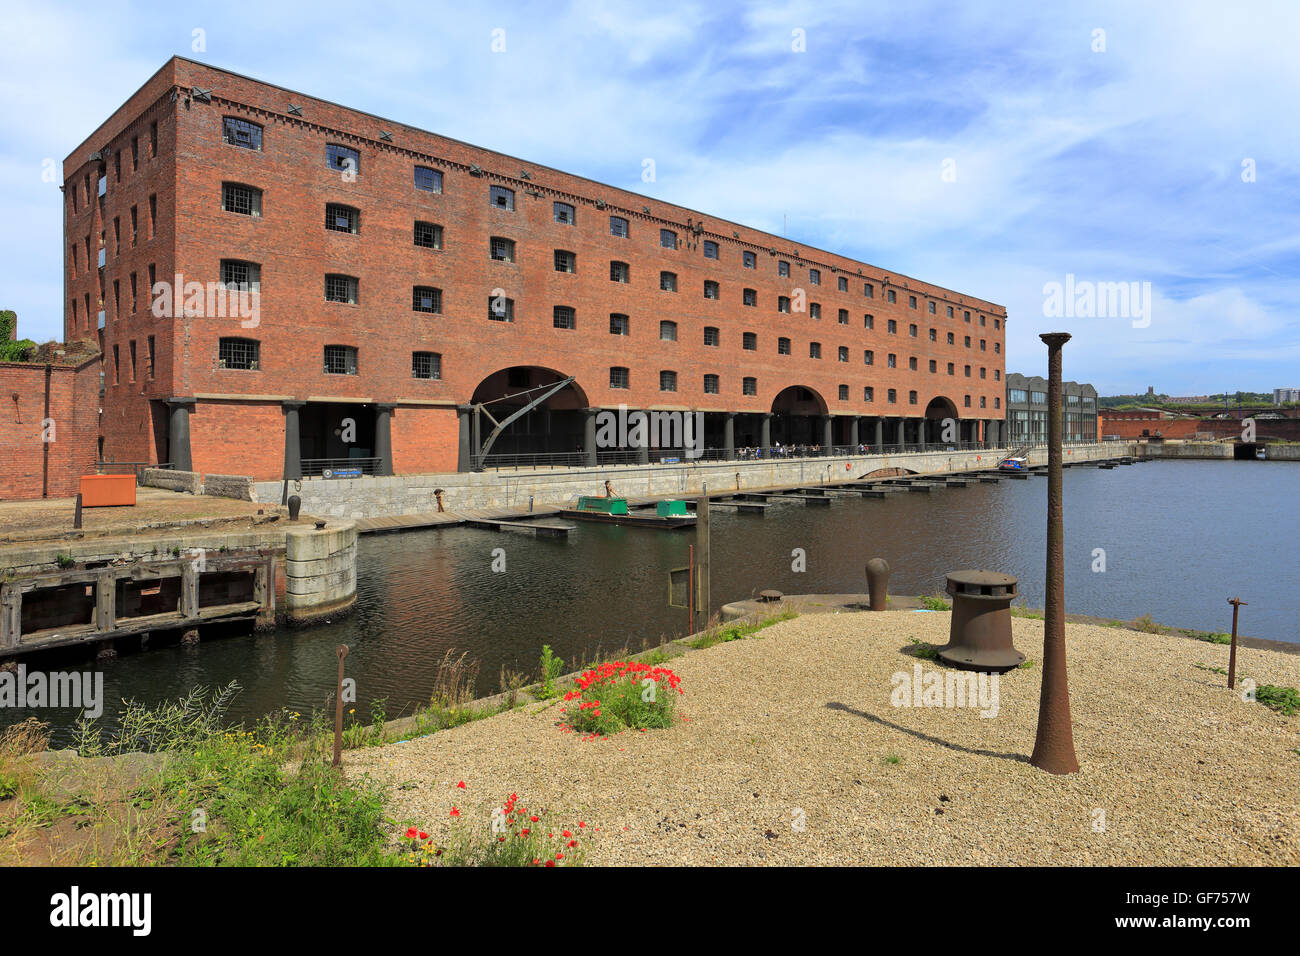 Titanic Hotel ehemaligen Rum Lager, Stanley Dock, Liverpool, Merseyside, England, UK. Stockfoto